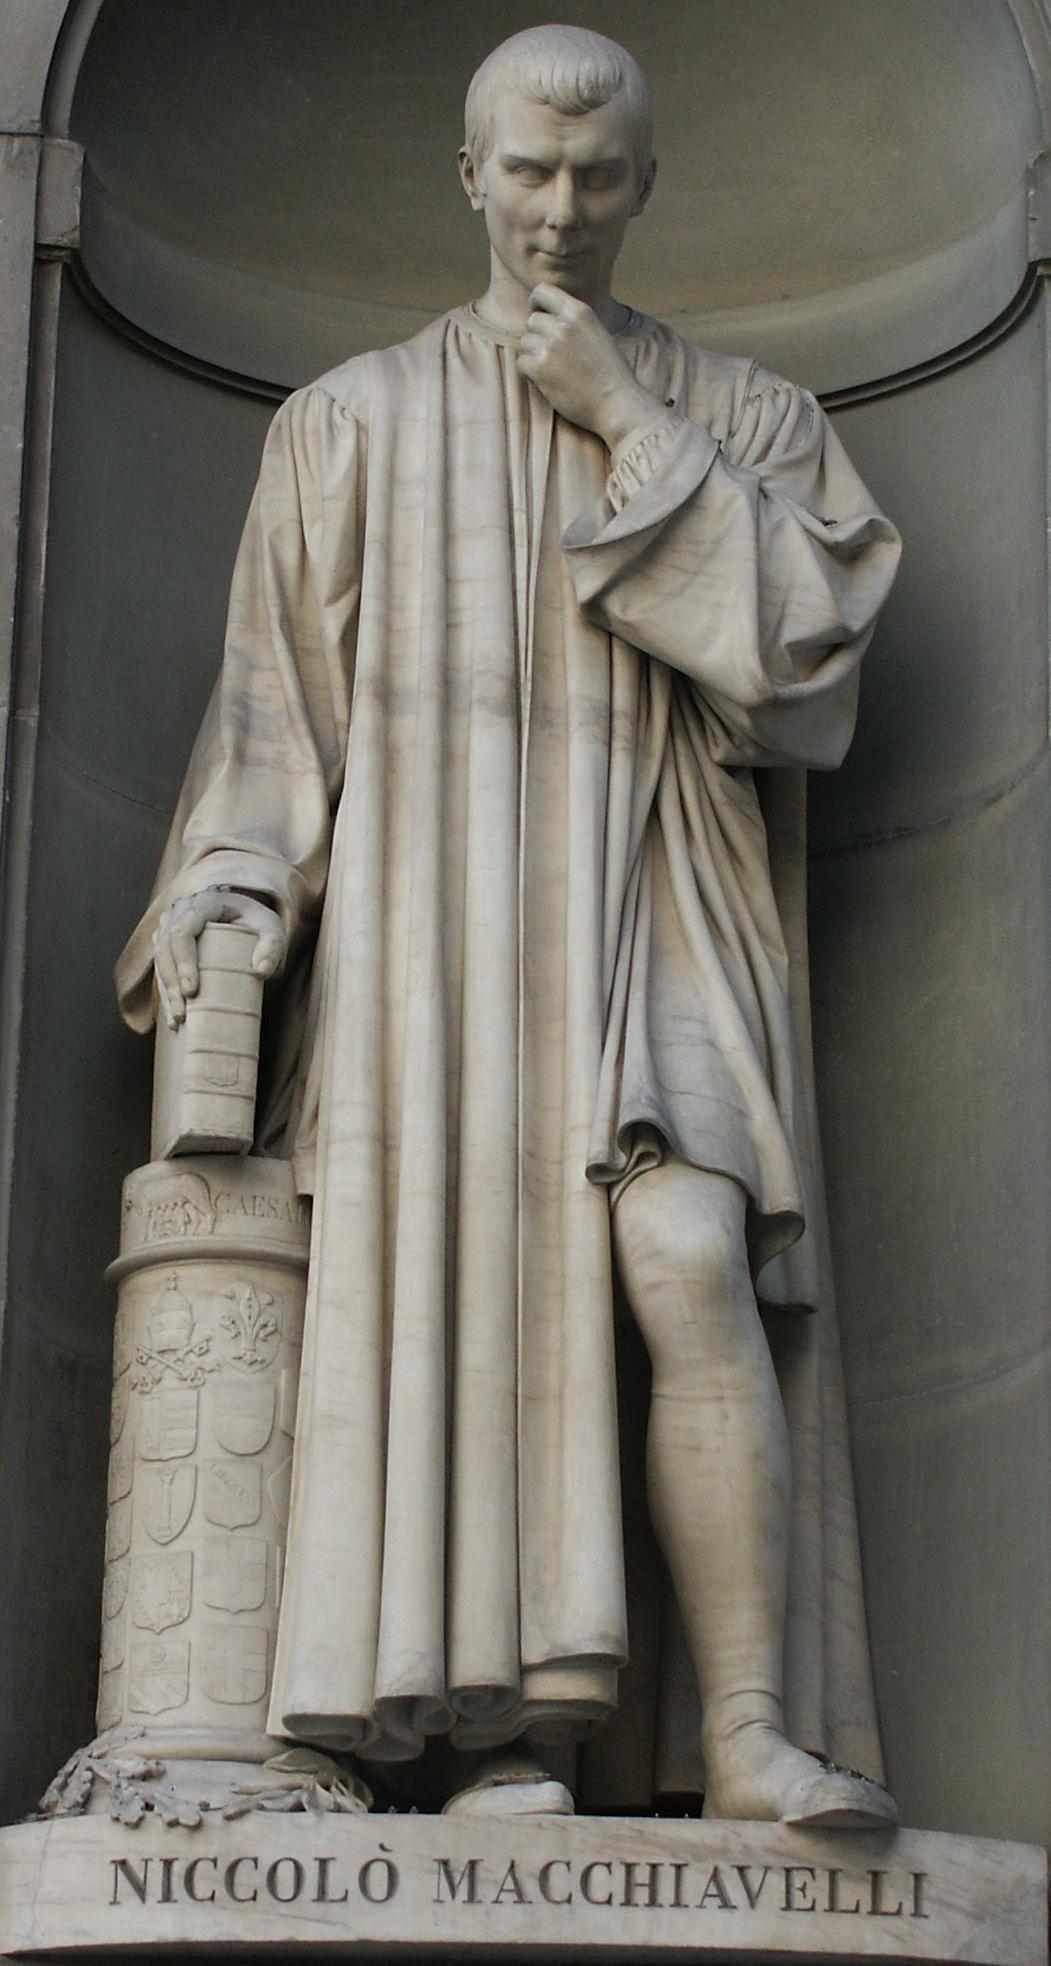 La statua di Niccolò Machiavelli esposta nel Piazzale degli Uffizi a Firenze